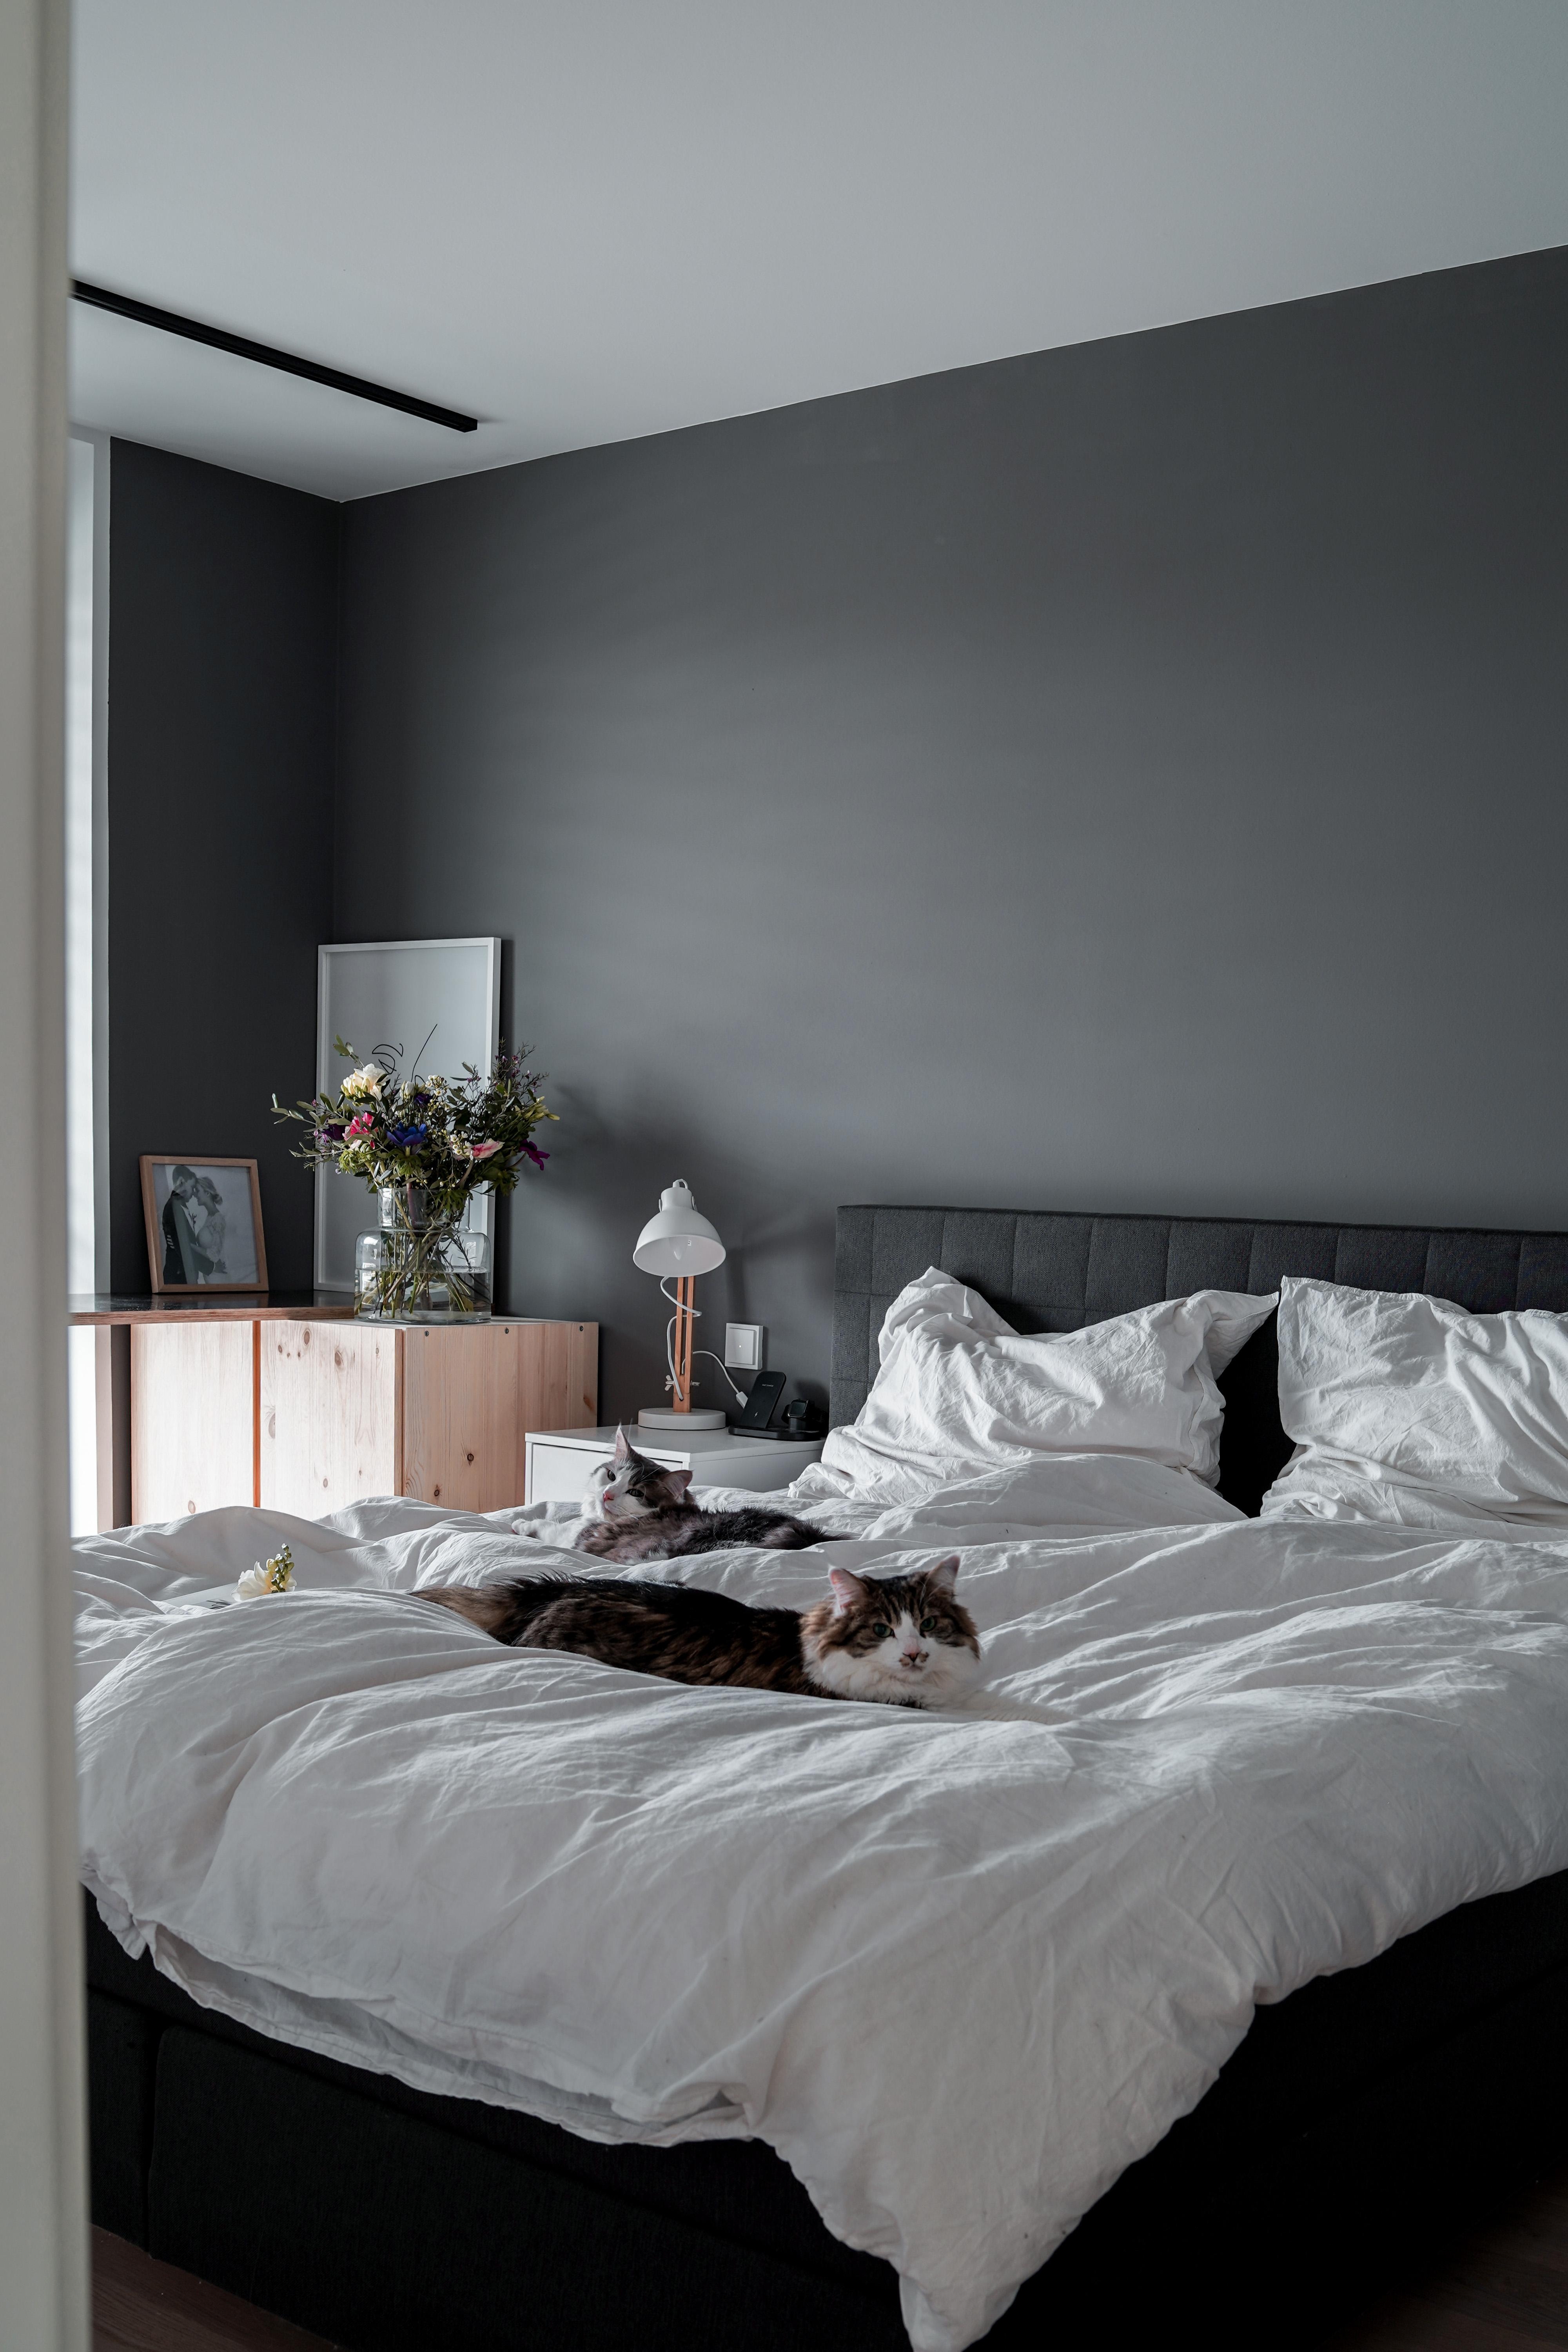 Black Beauty 🖤
#schlafzimmer #bedroom #dunklewände #blackdesign #catlover #bedroomdesign #blacklover